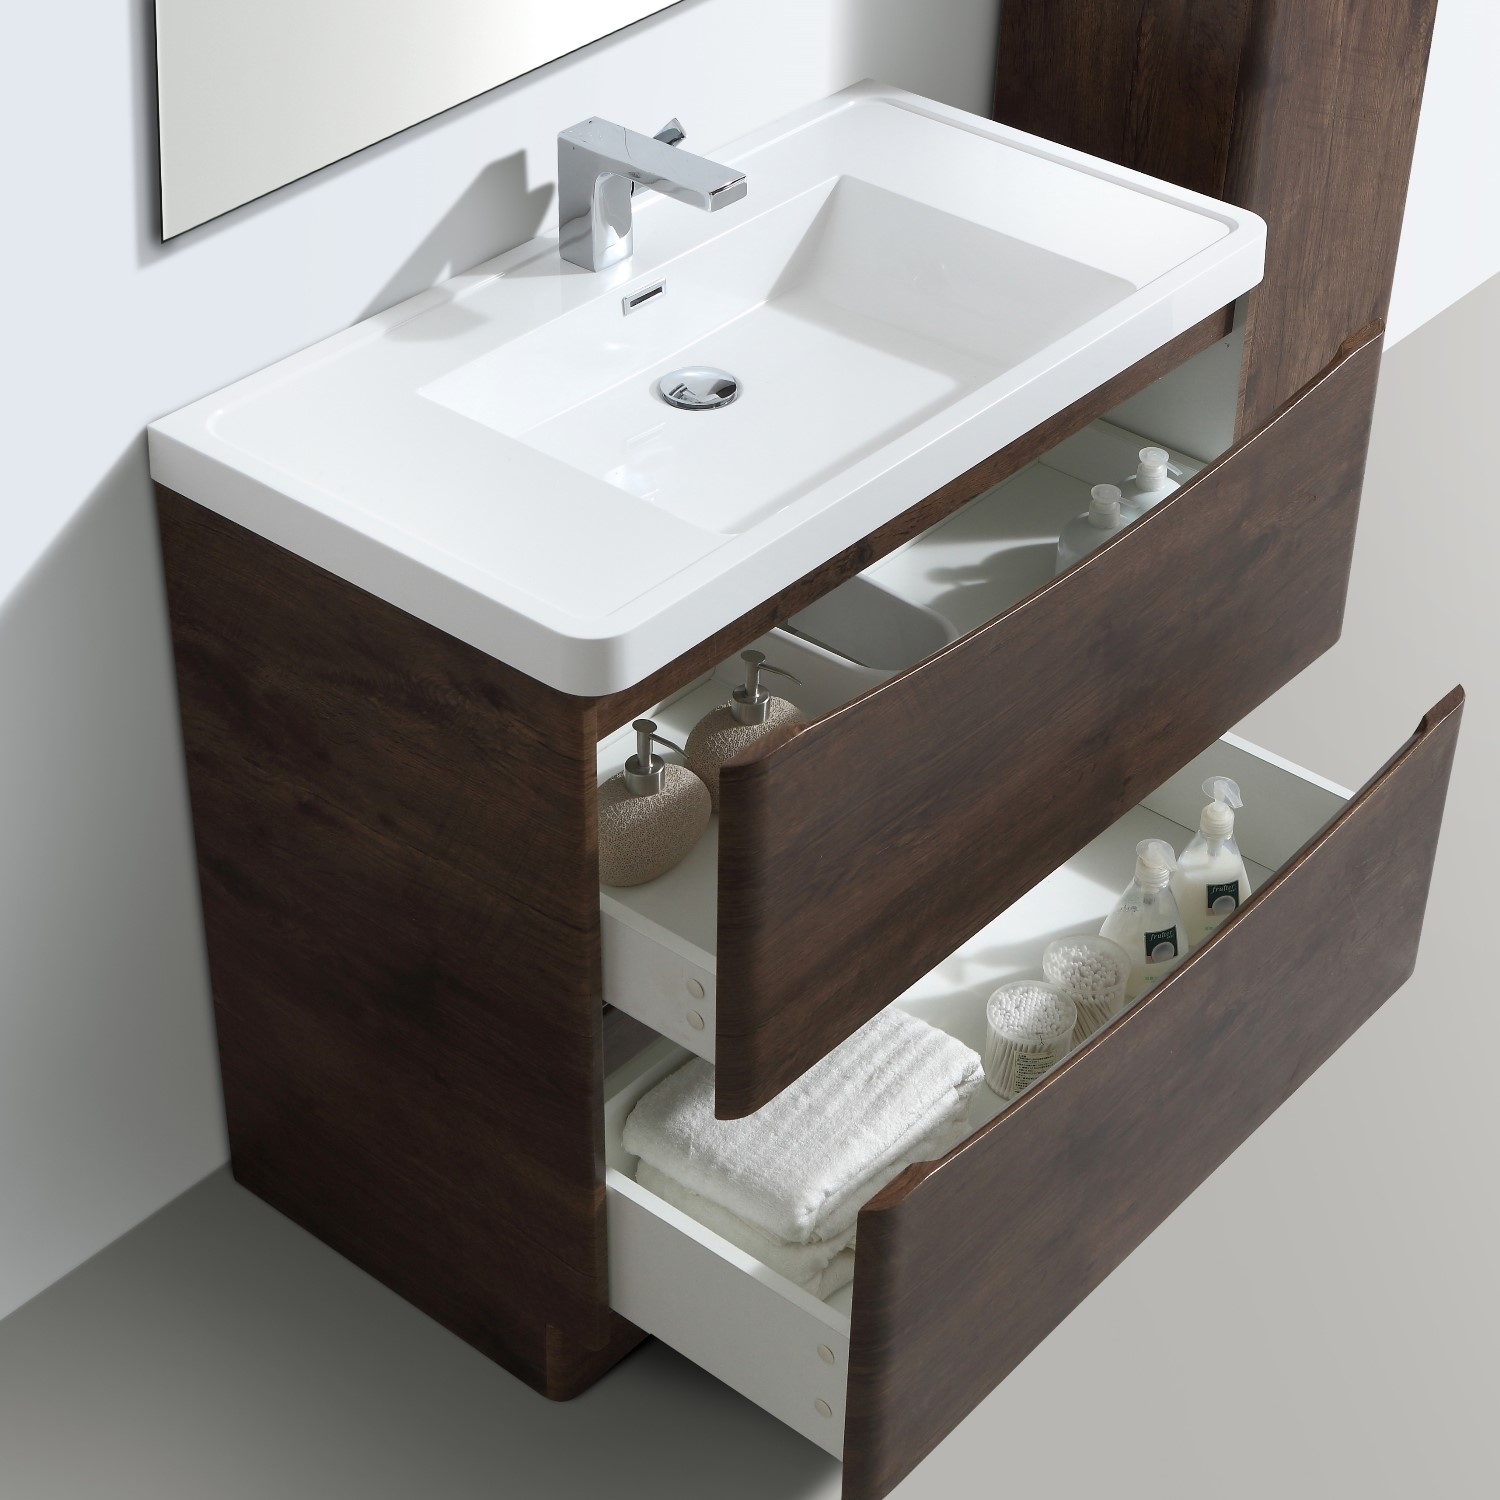 Walnut Free Standing Bathroom Vanity, Free Standing Bathroom Vanity With Sink